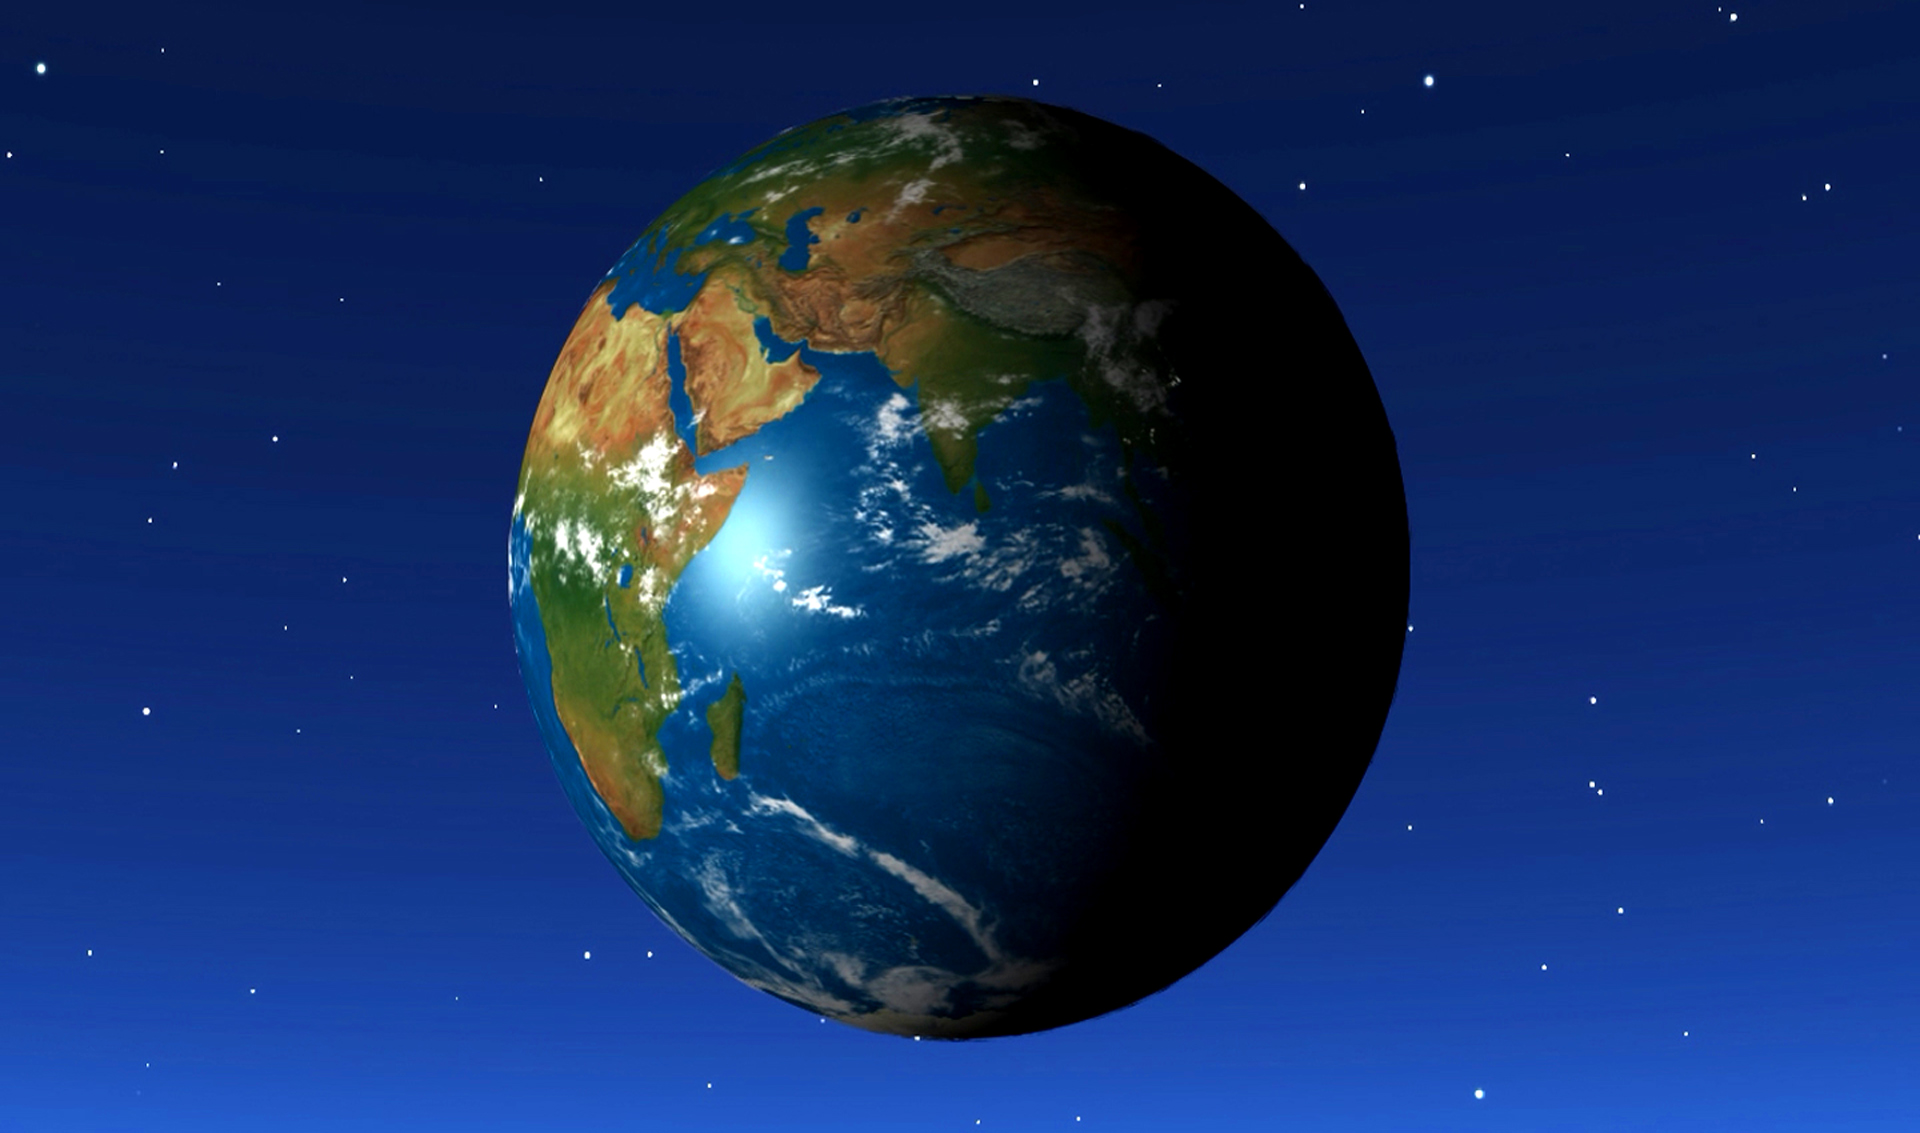 tierra live wallpaper,planeta,tierra,objeto astronómico,atmósfera,mundo